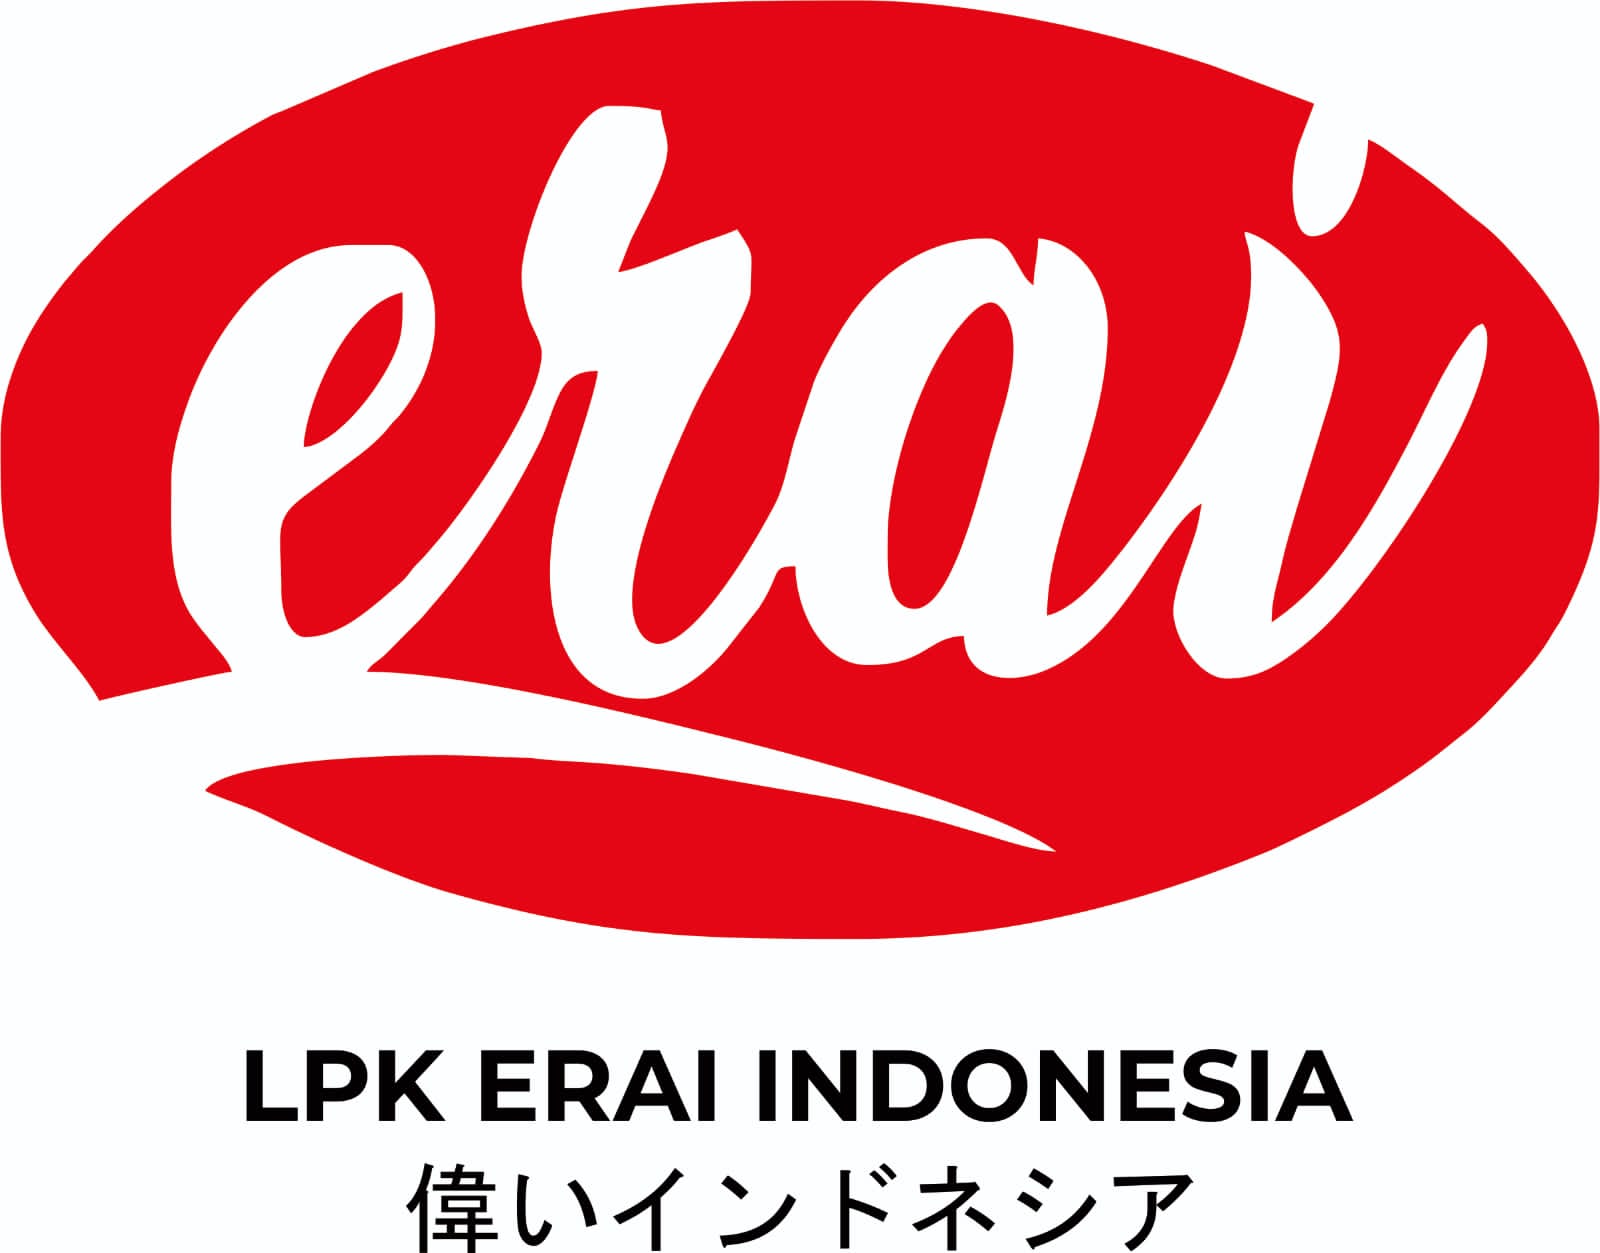 Lpk Erai Indonesia company logo